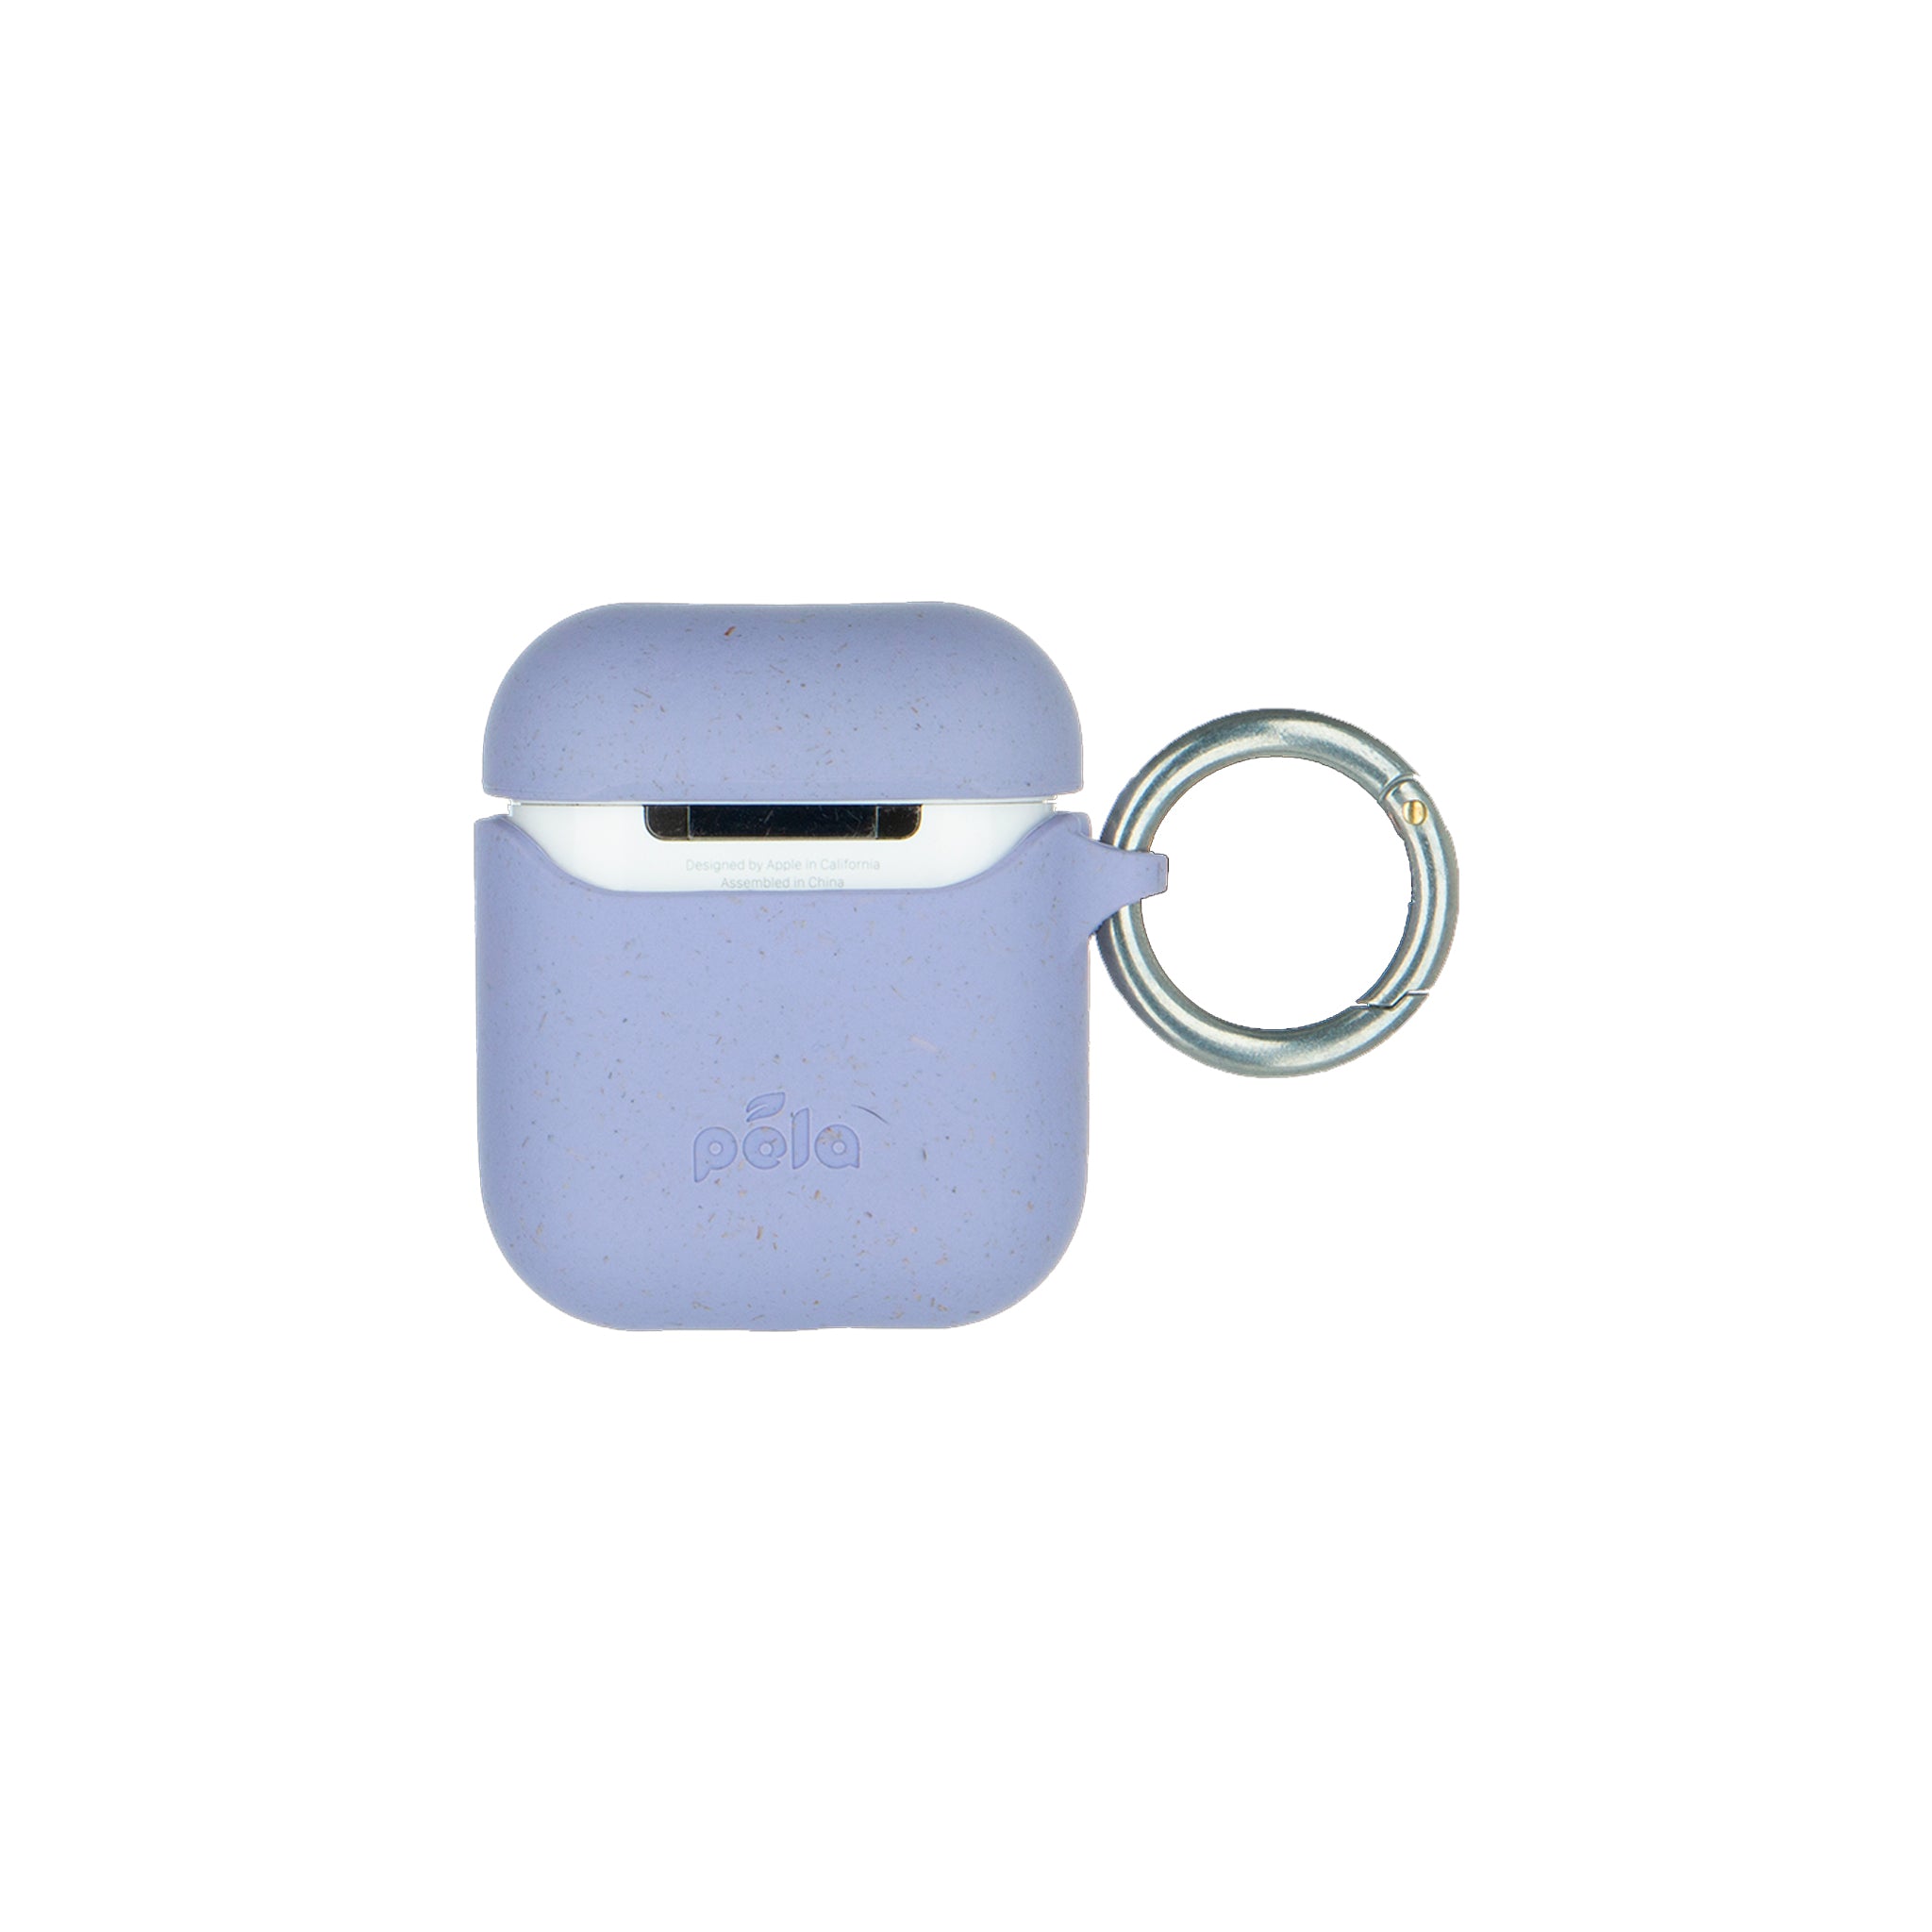 Pela - Eco Friendly Case For Apple Airpods - Lavender